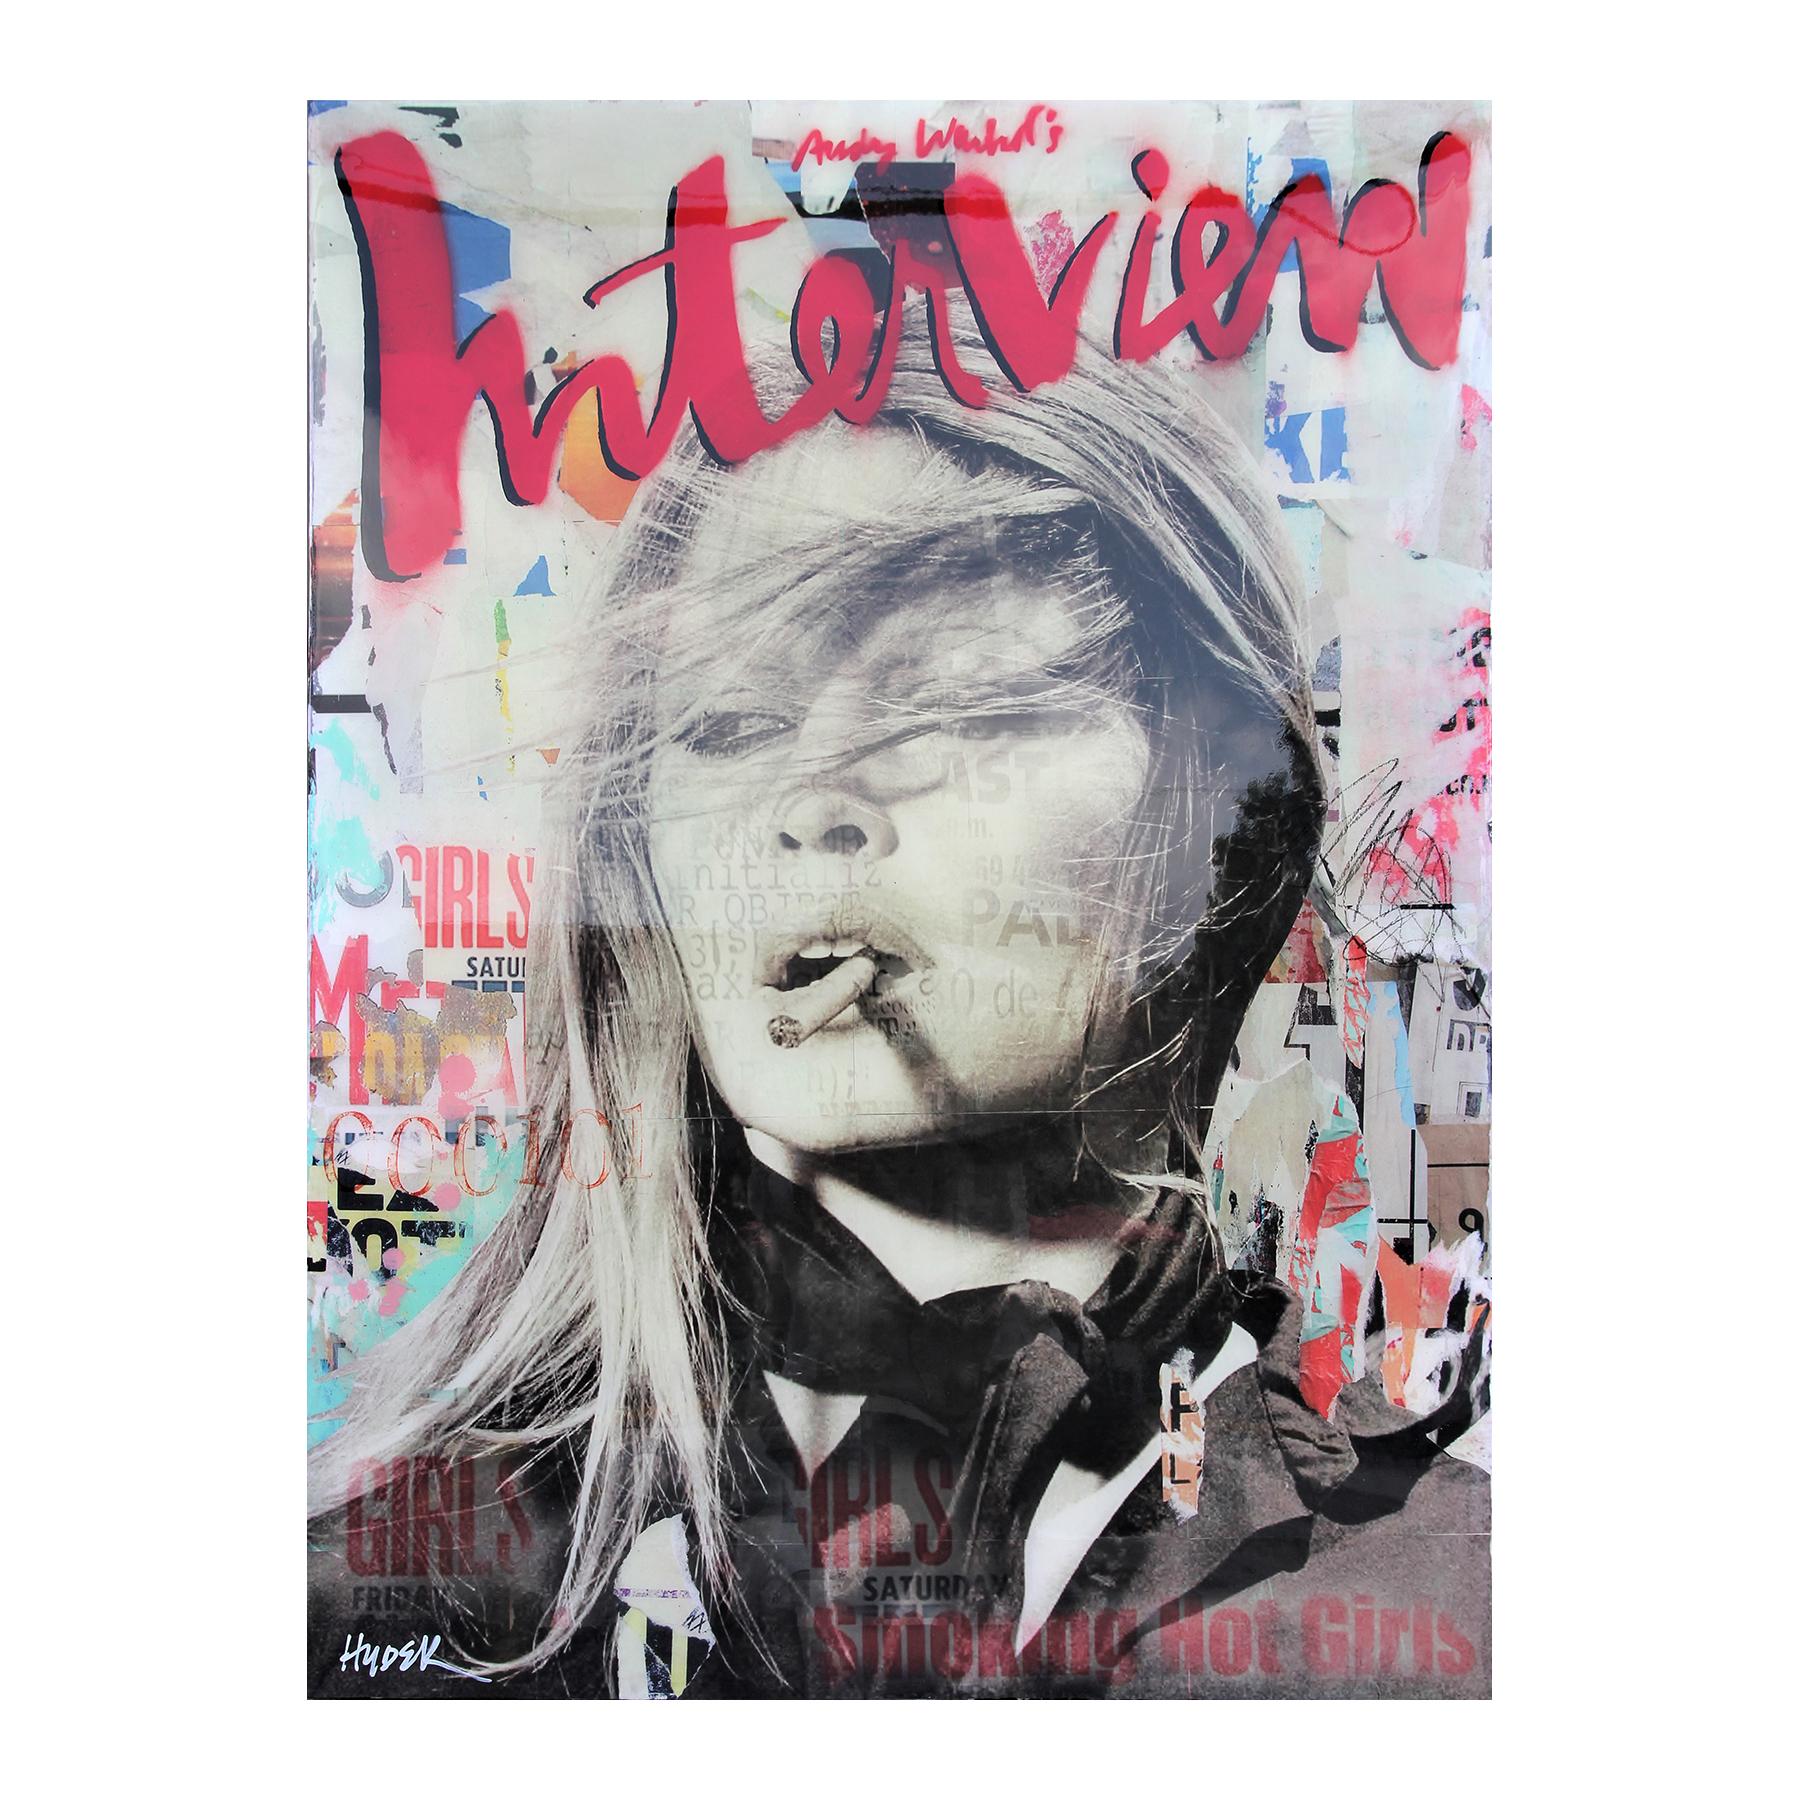 Jim Hudek Portrait Painting - "Smoking Hot Girls" Colorful Brigitte Bardot Mixed Media Pop Art Resin Collage